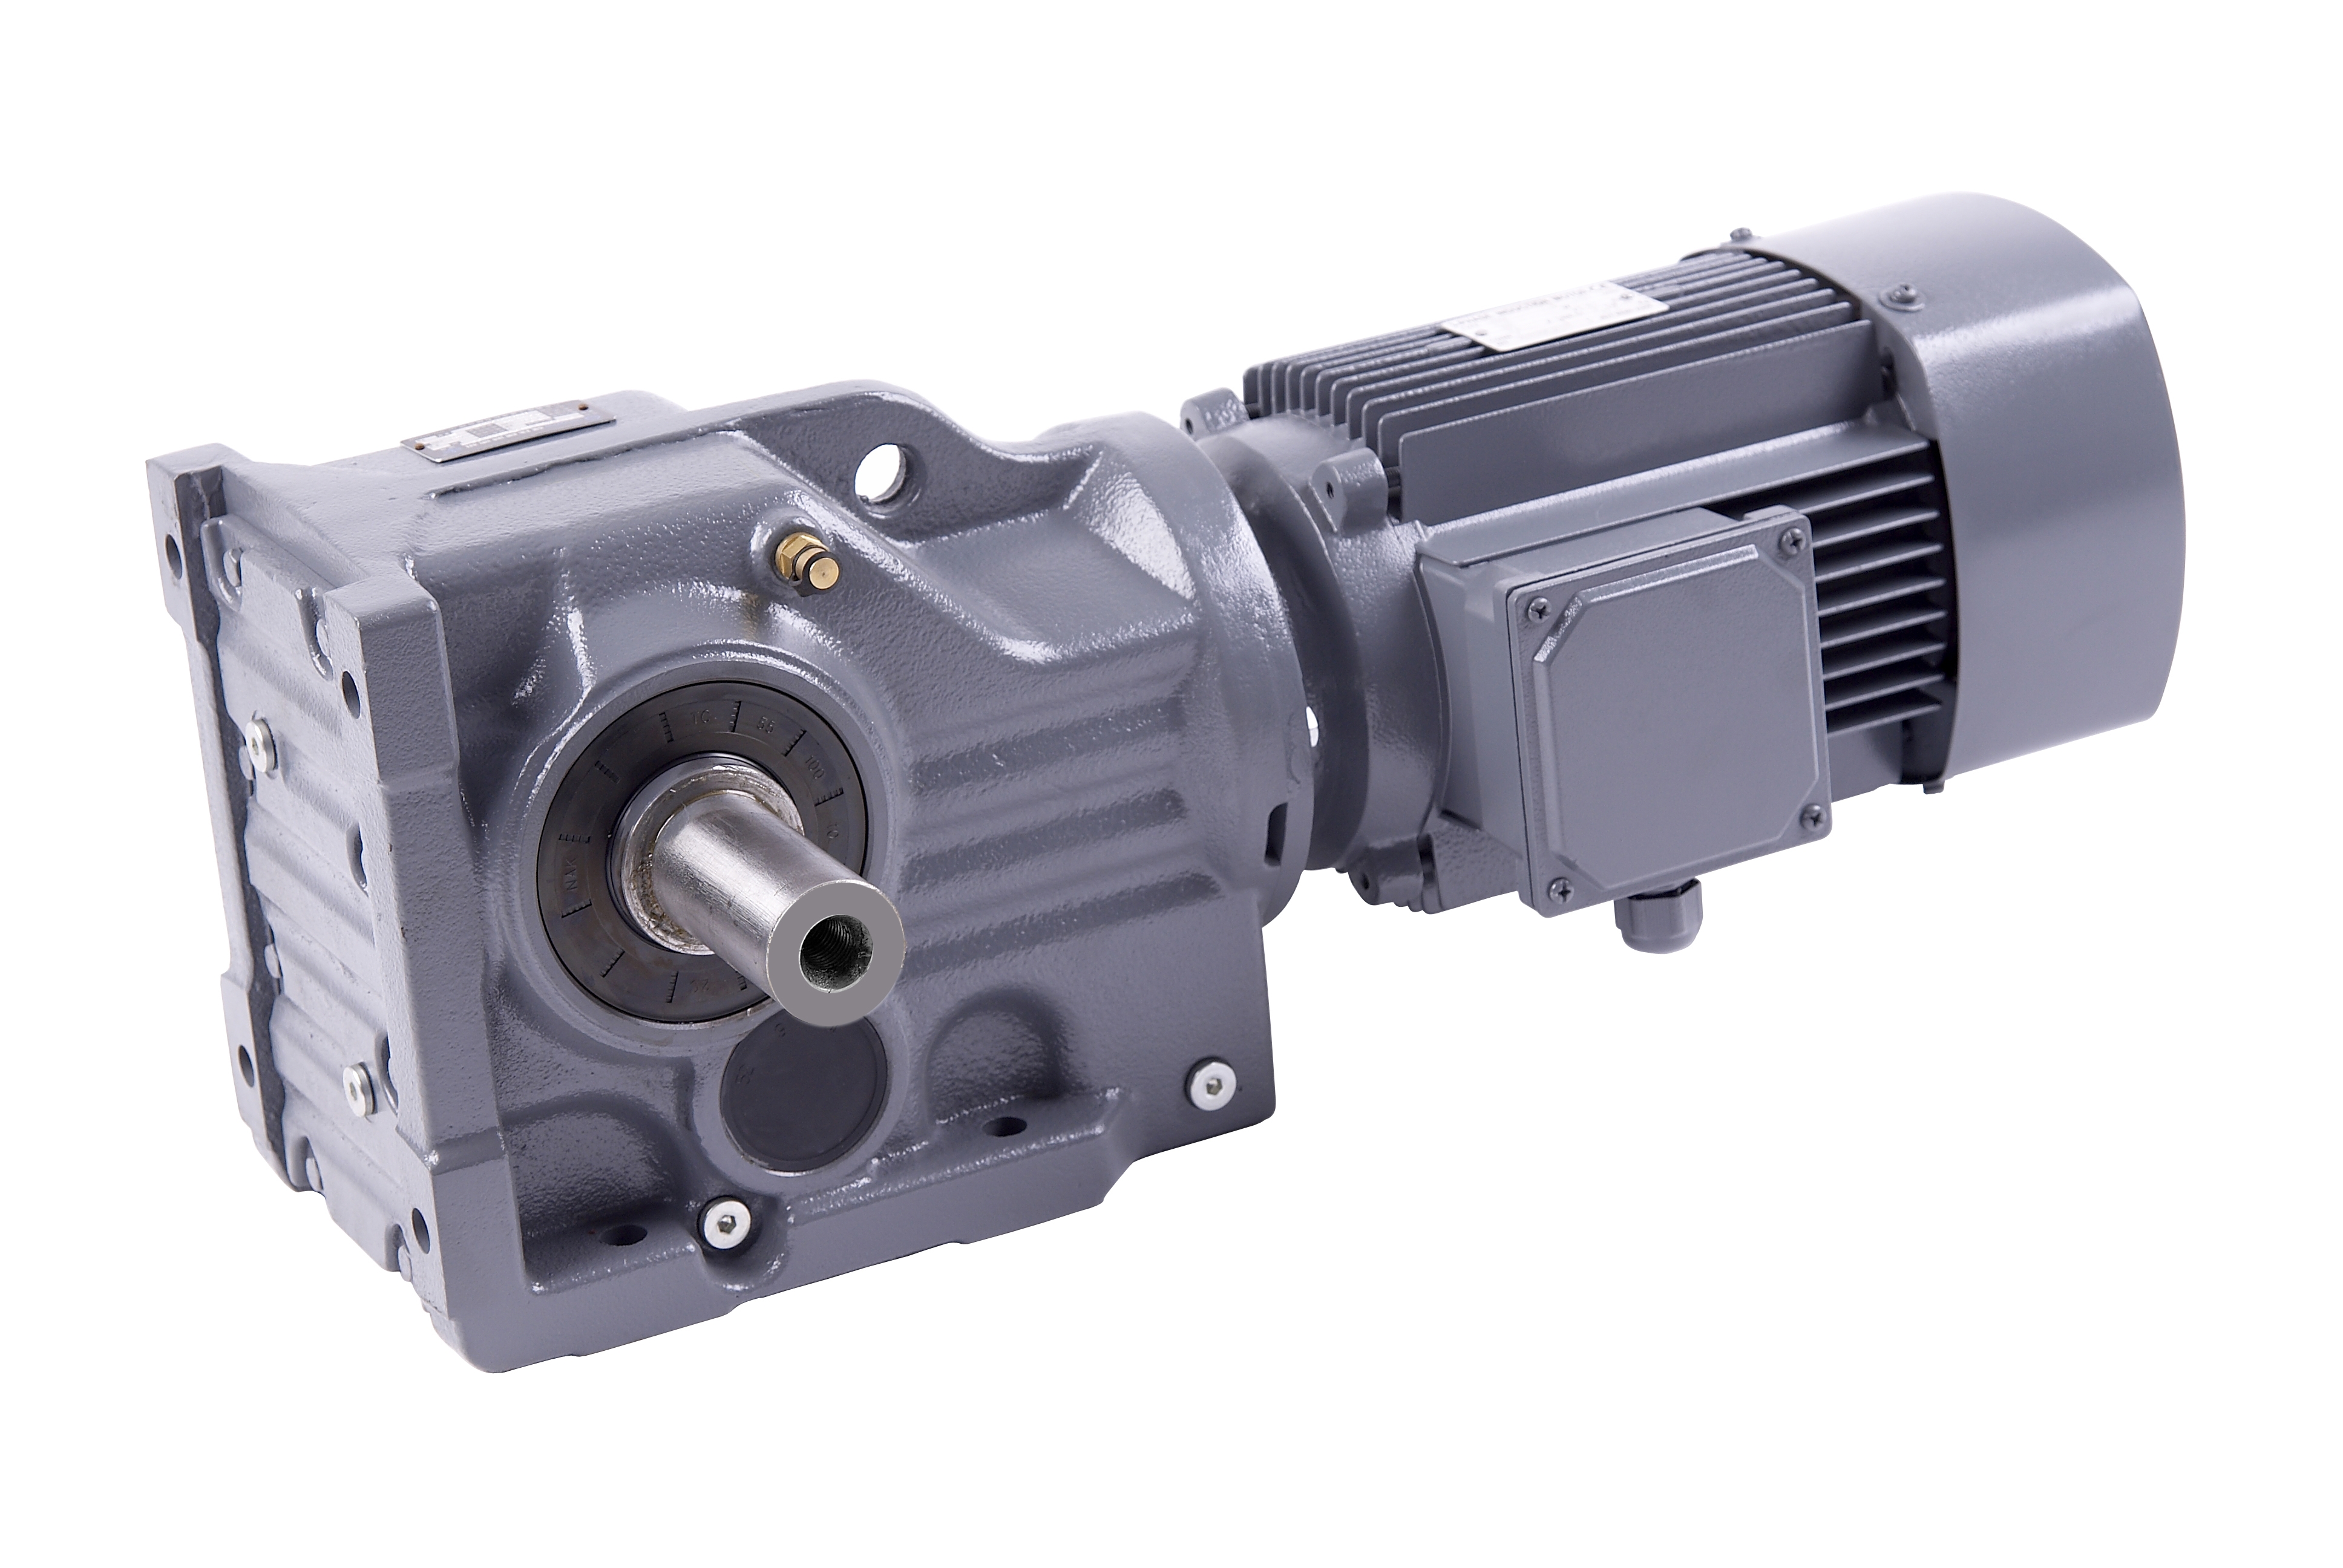 gear-motor unit for industrial solution